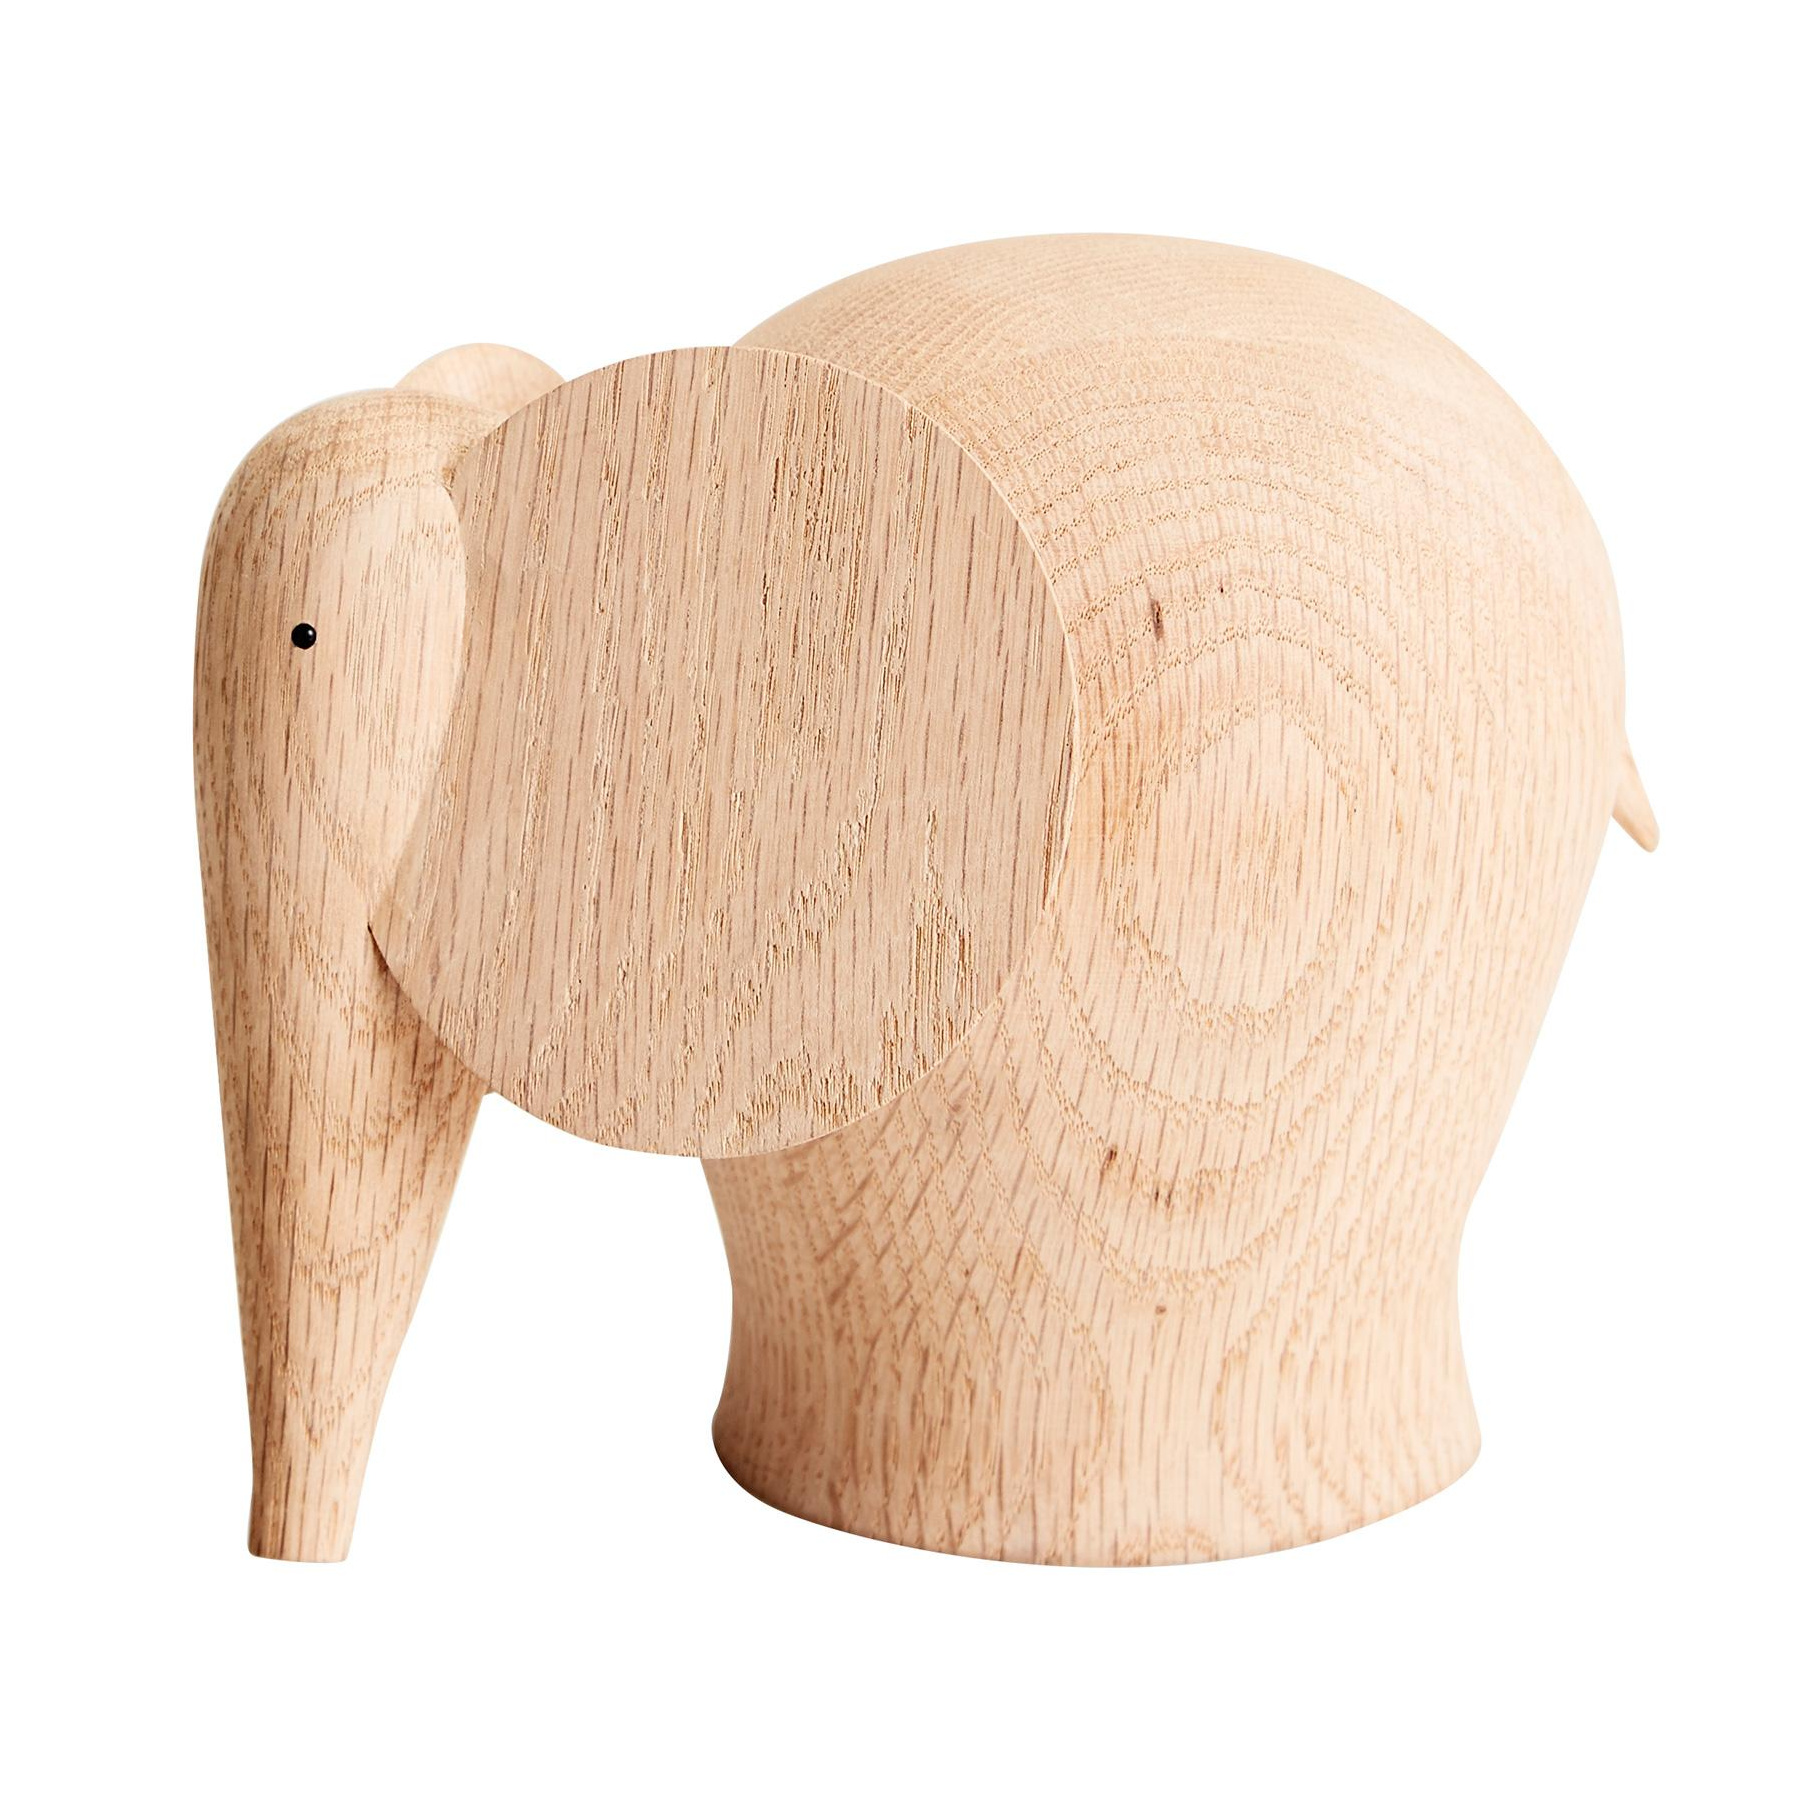 Woud - Nunu Elefant Holzfigur M - eiche/matt lackiert/LxBxH 19,8x16,5x16cm von Woud